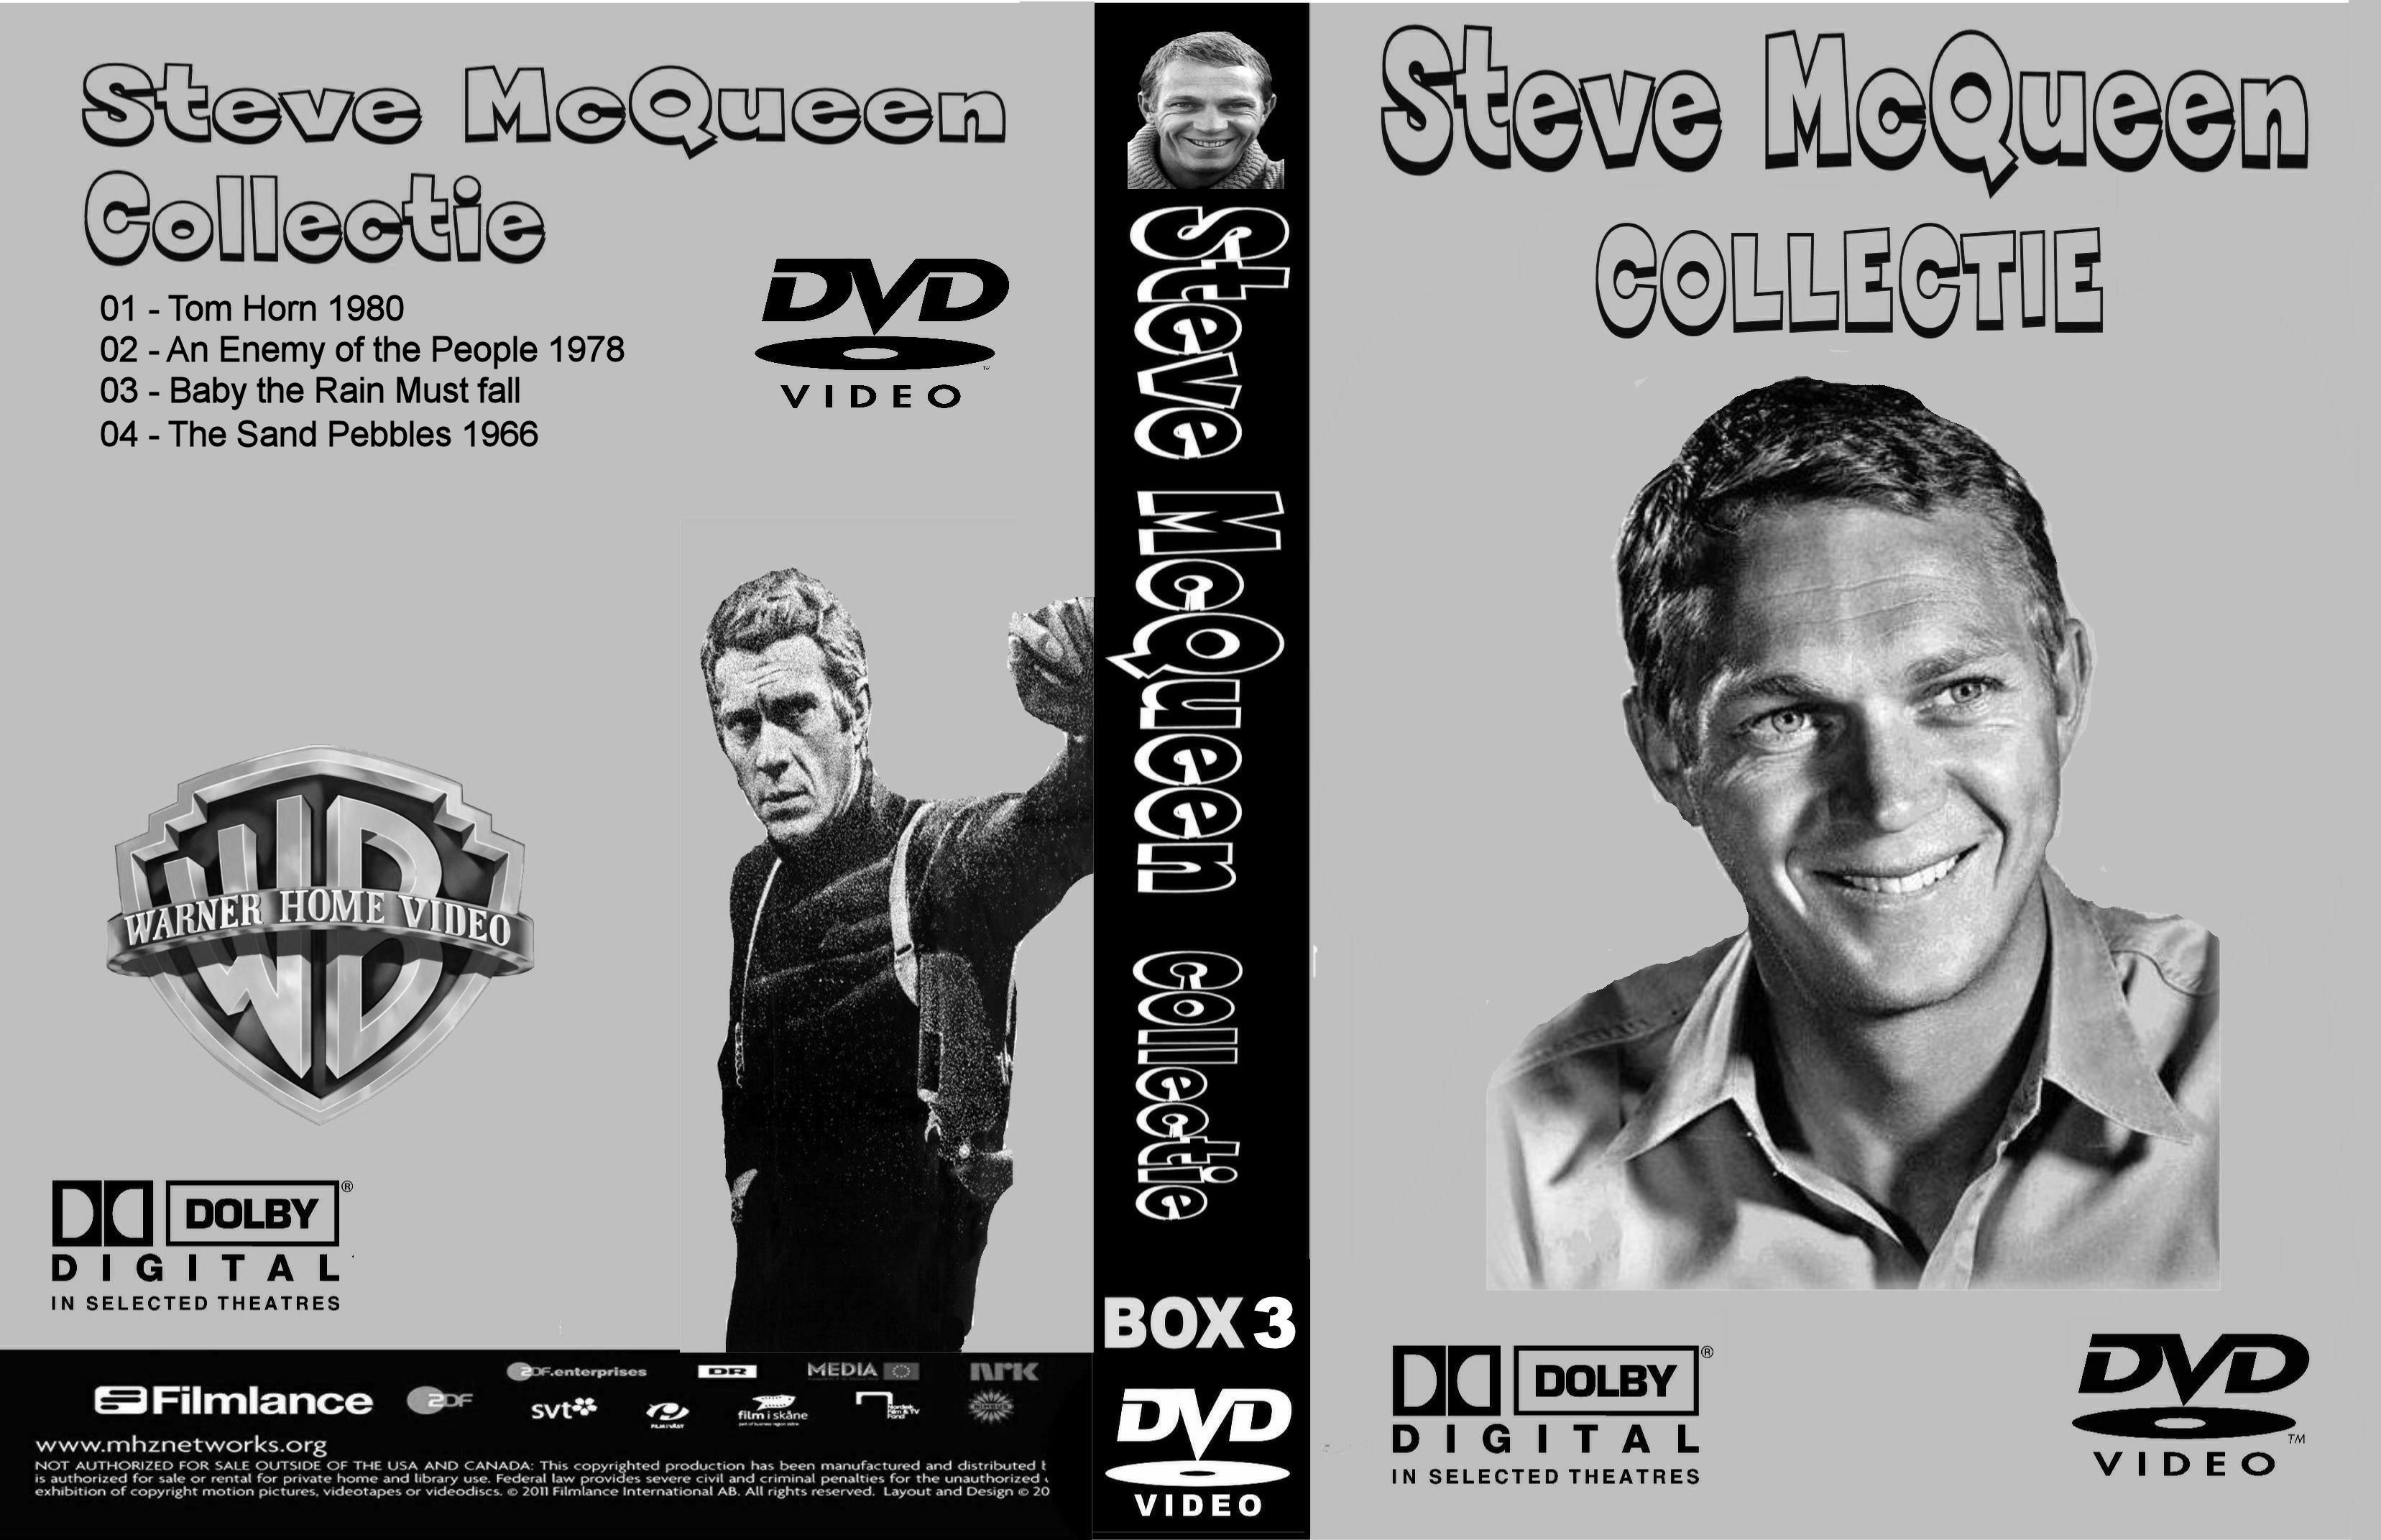 Steve McQueen Collectie BoX 3 (The Sand Pebbles 1966)